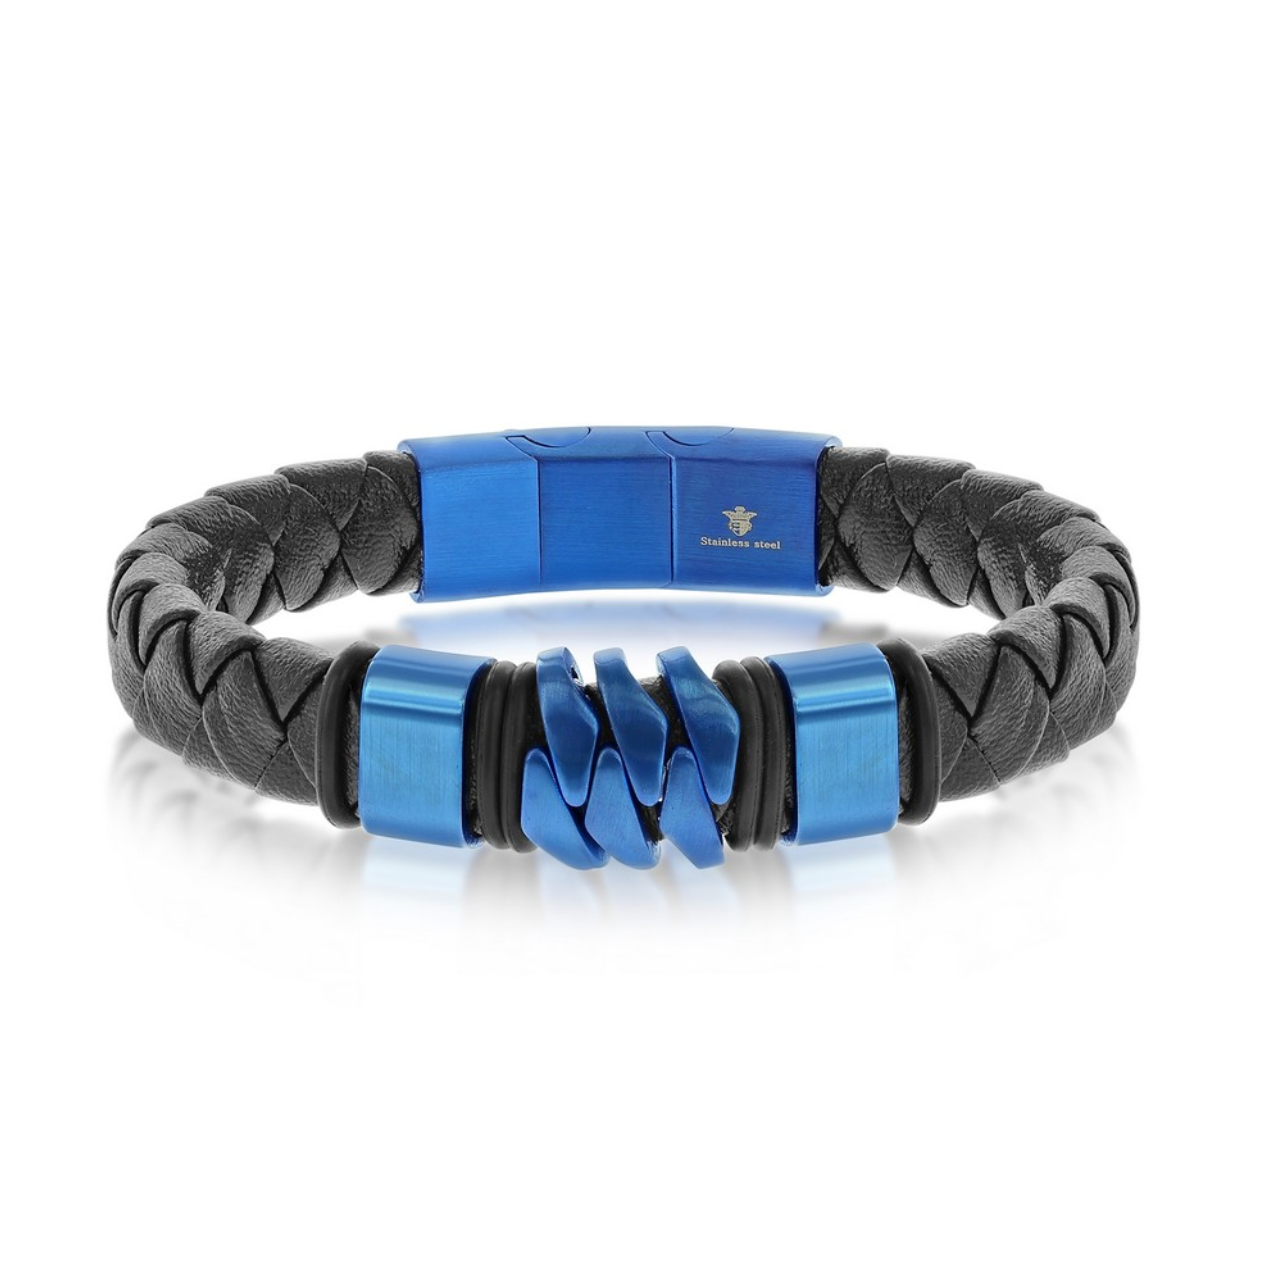 Blue Stainless Steel Genuine Black Leather Bracelet - 8.5"